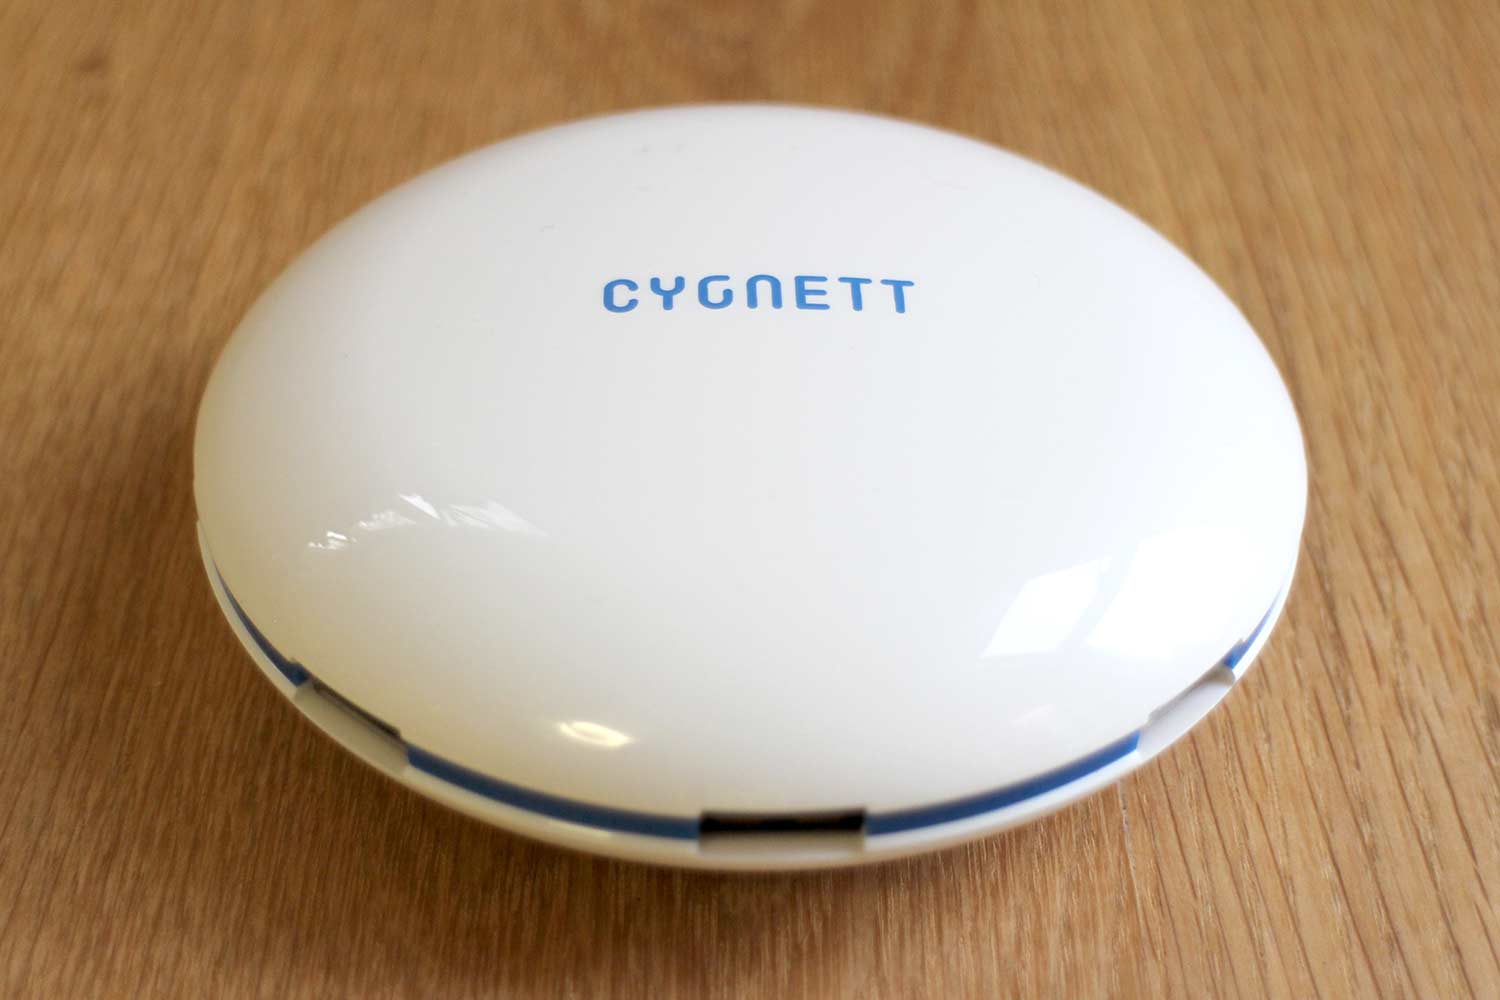 Cygnett Supercharger UFO base